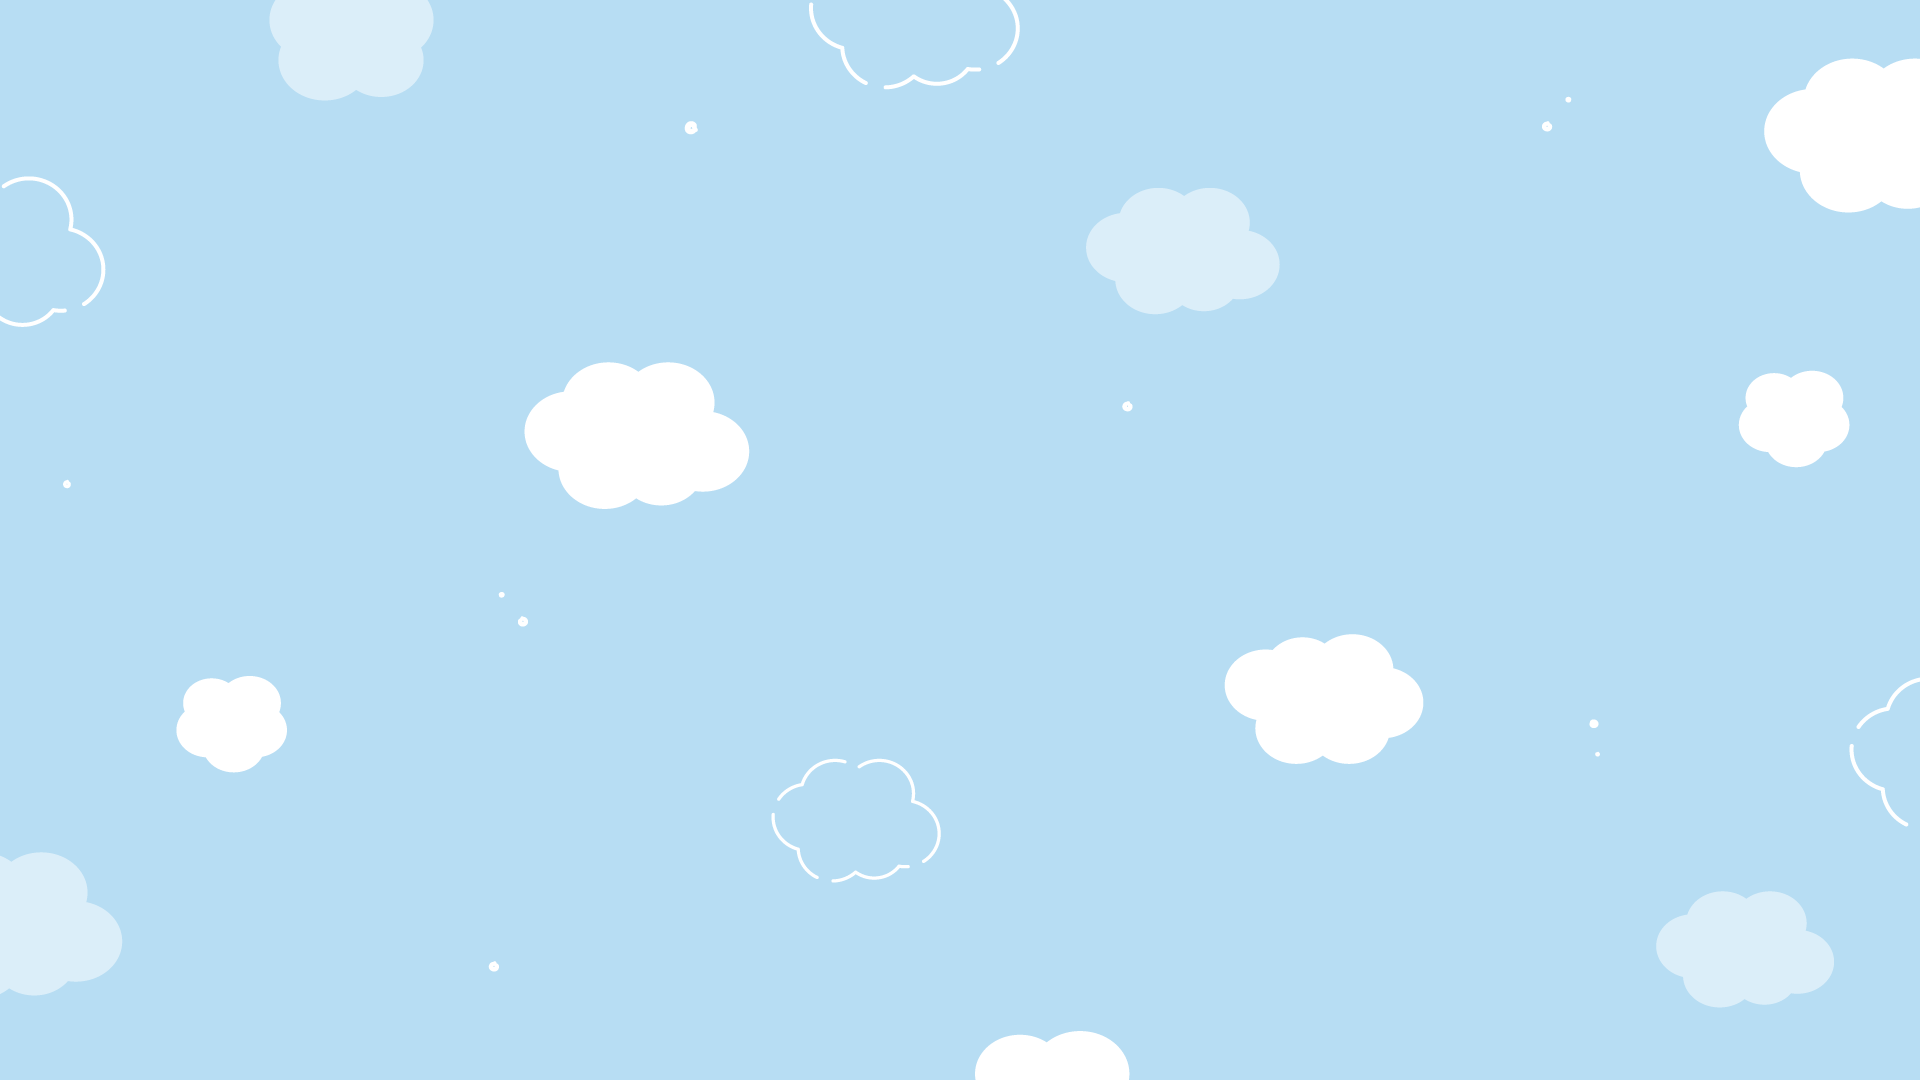 Okumono 背景 動画フリー素材 New かわいい雲の柄背景 11種 T Co Cvknhjufrg ゆるく手書き風な雲の浮かぶ背景素材です シンプルなのでいろいろな場面で使えそう Okumono フリー素材 Vtuber T Co Koo0gkkrsg Twitter